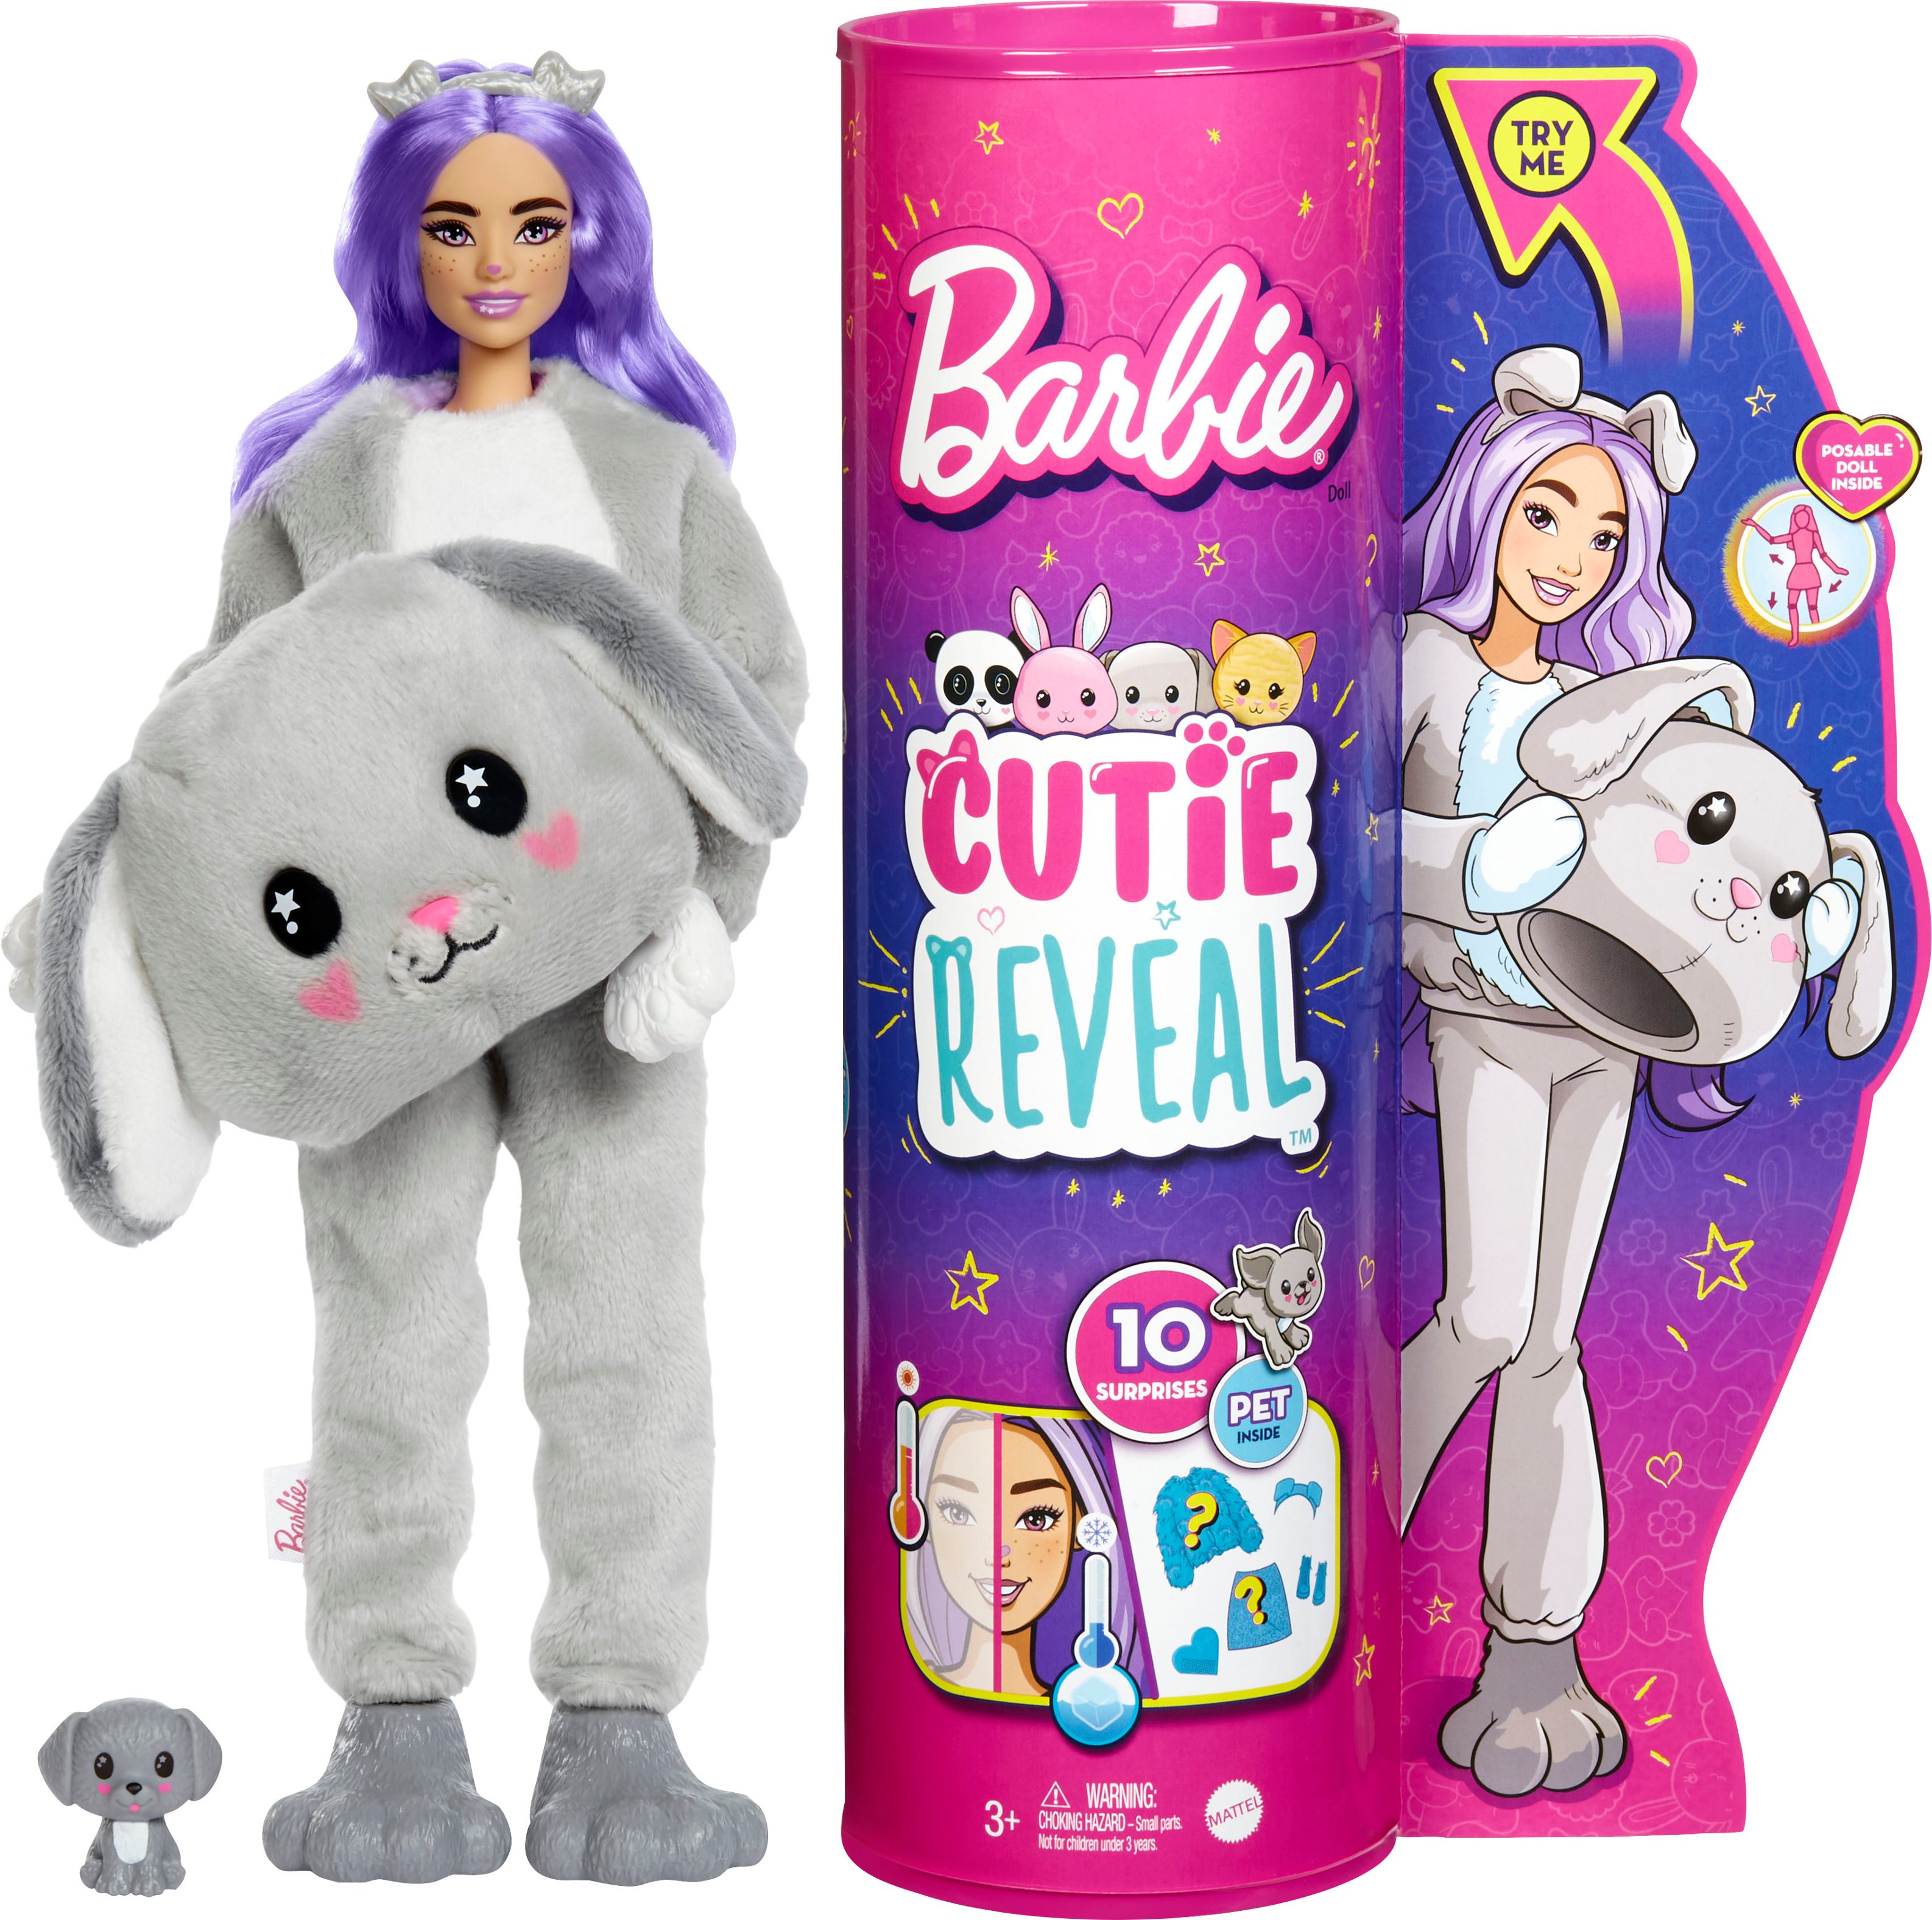 Barbie Cutie Reveal Doll Puppy HHG21 - Best Buy